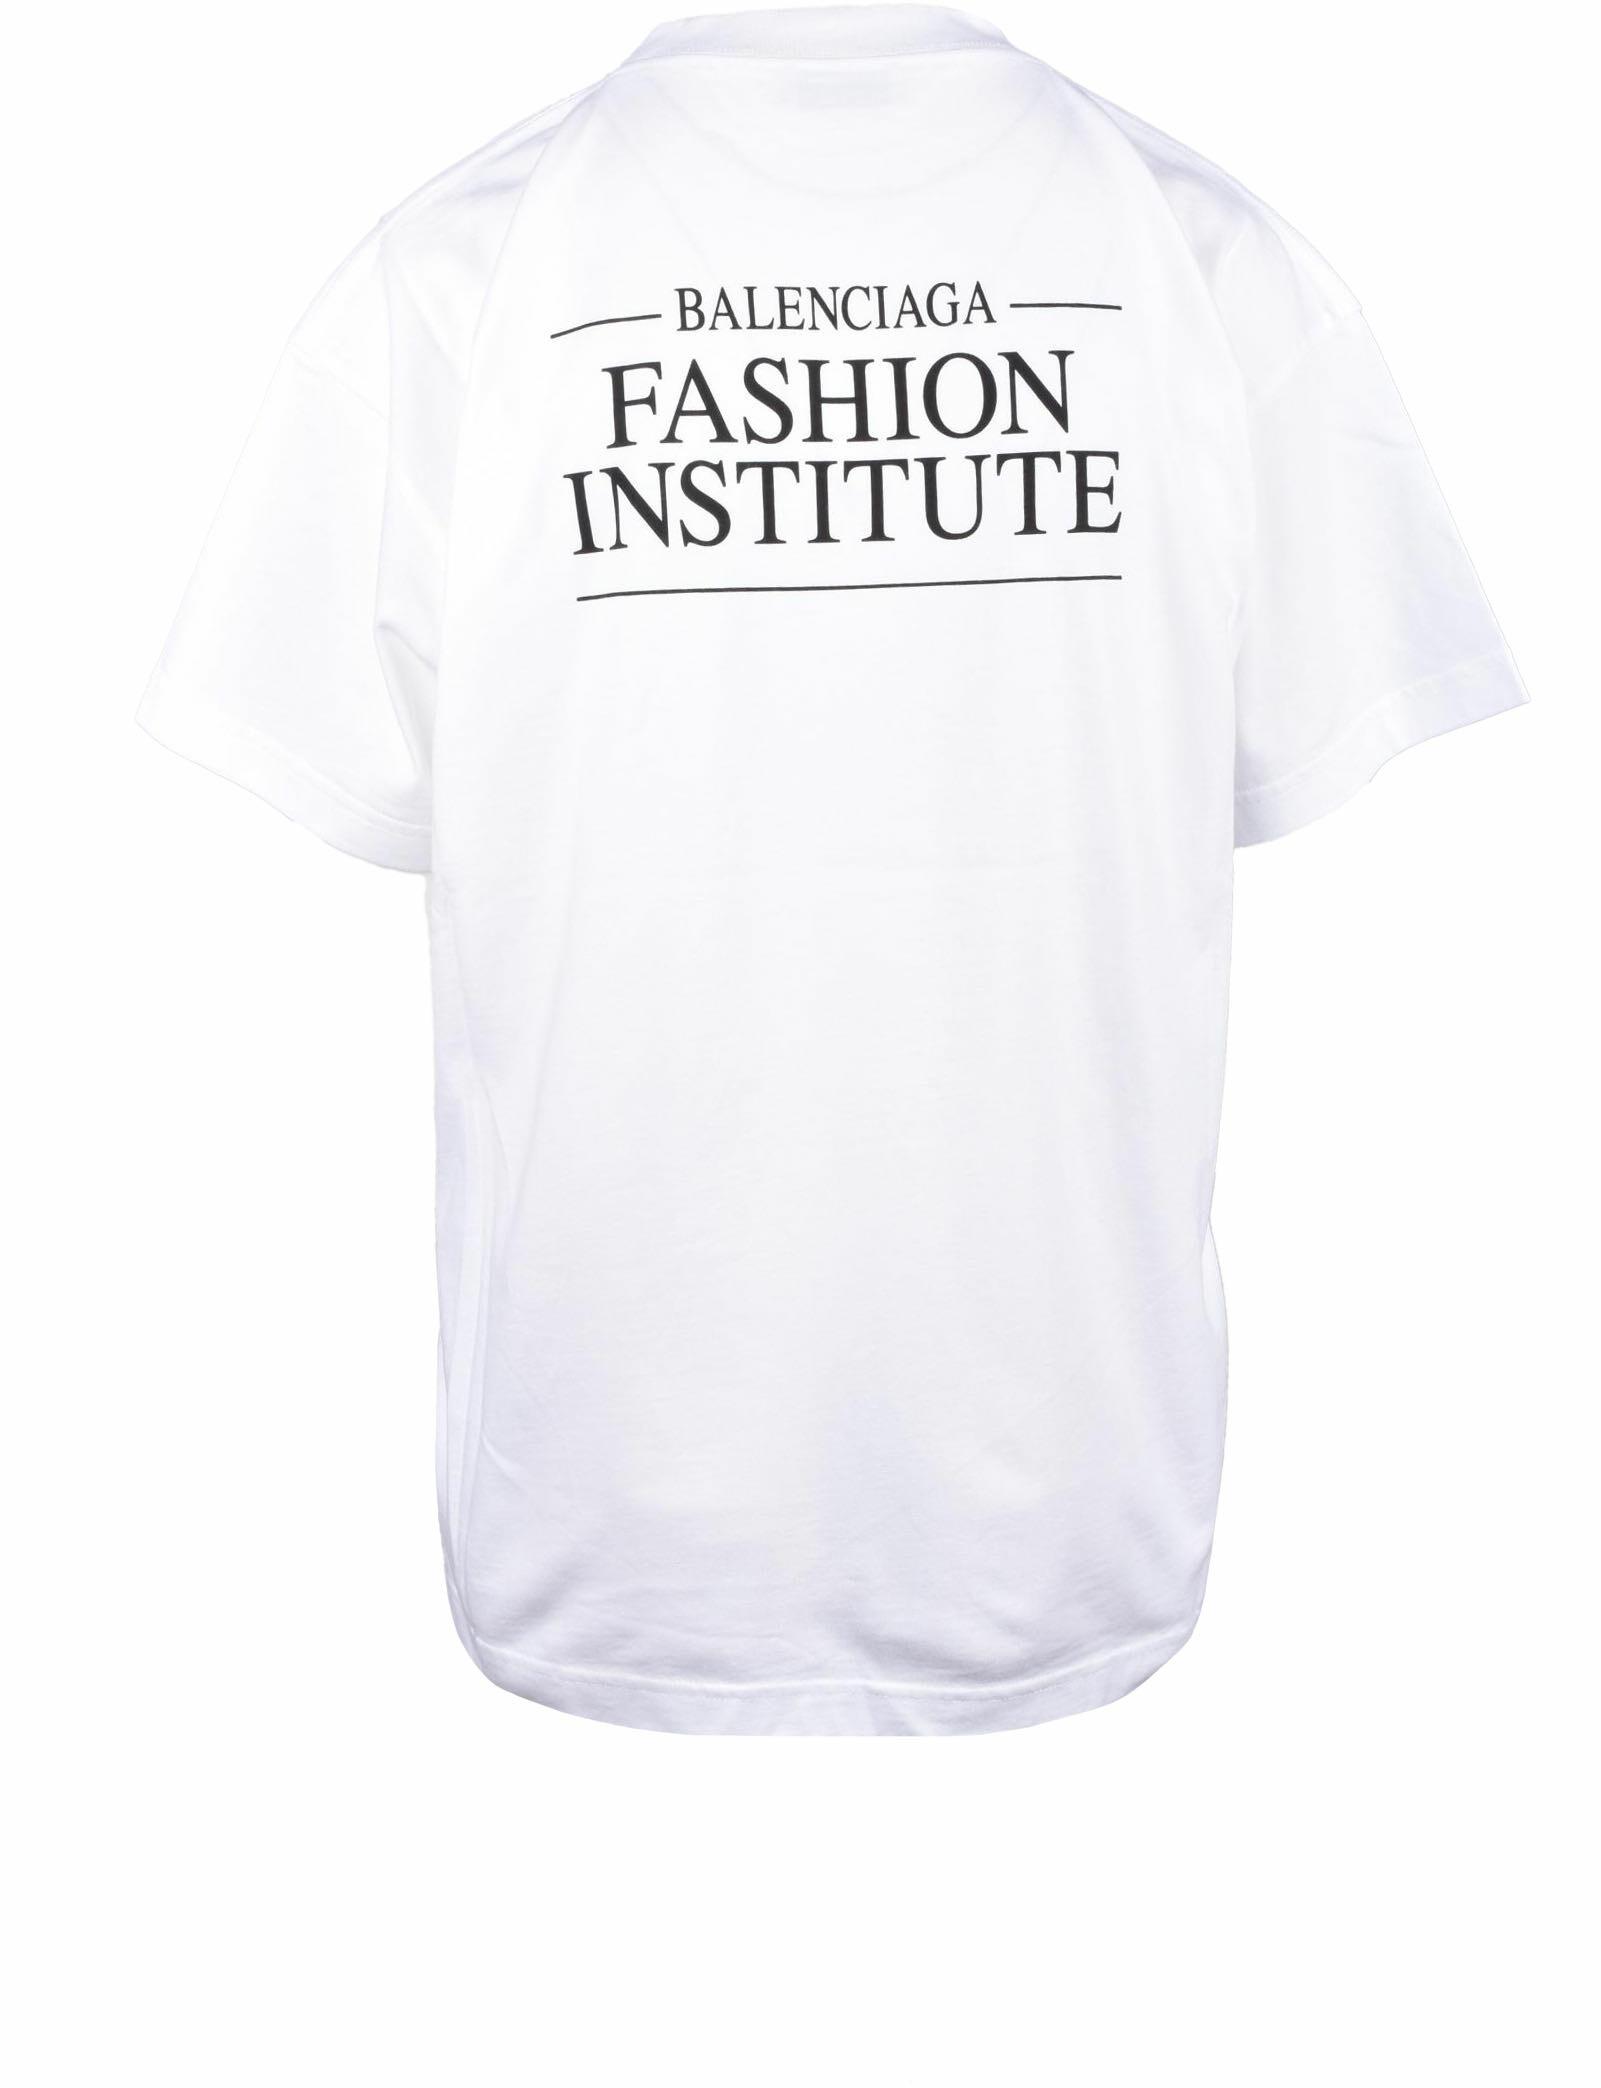 Balenciaga Women's Designer T-Shirt